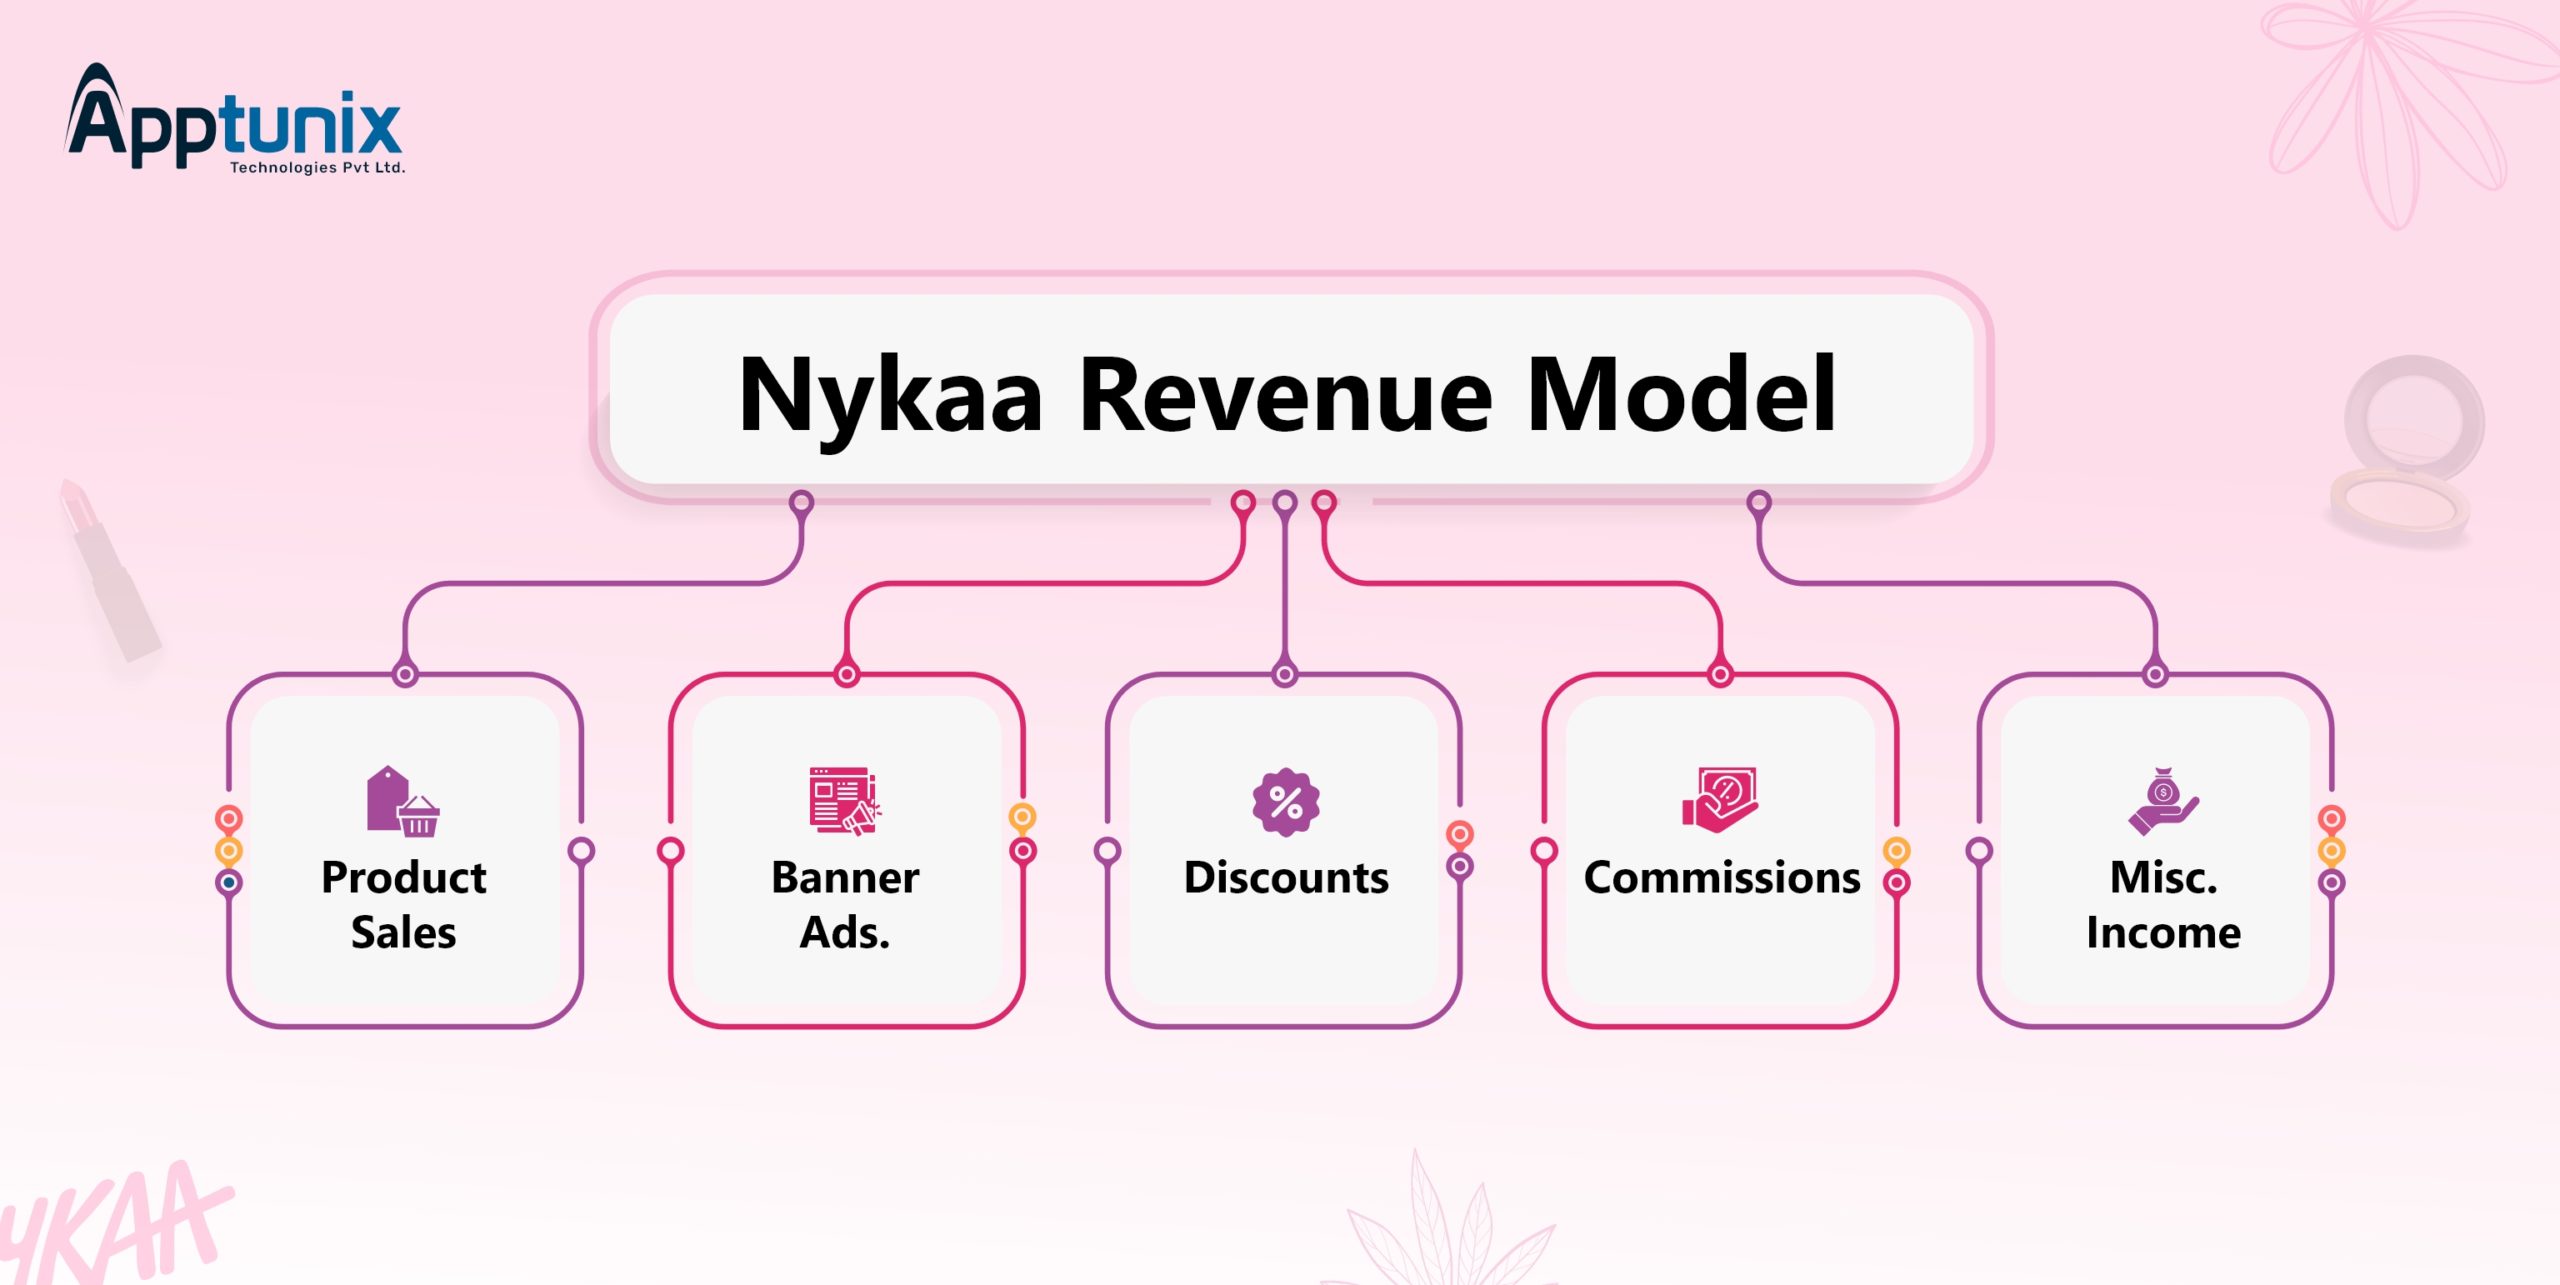 Revenue model of nykaa